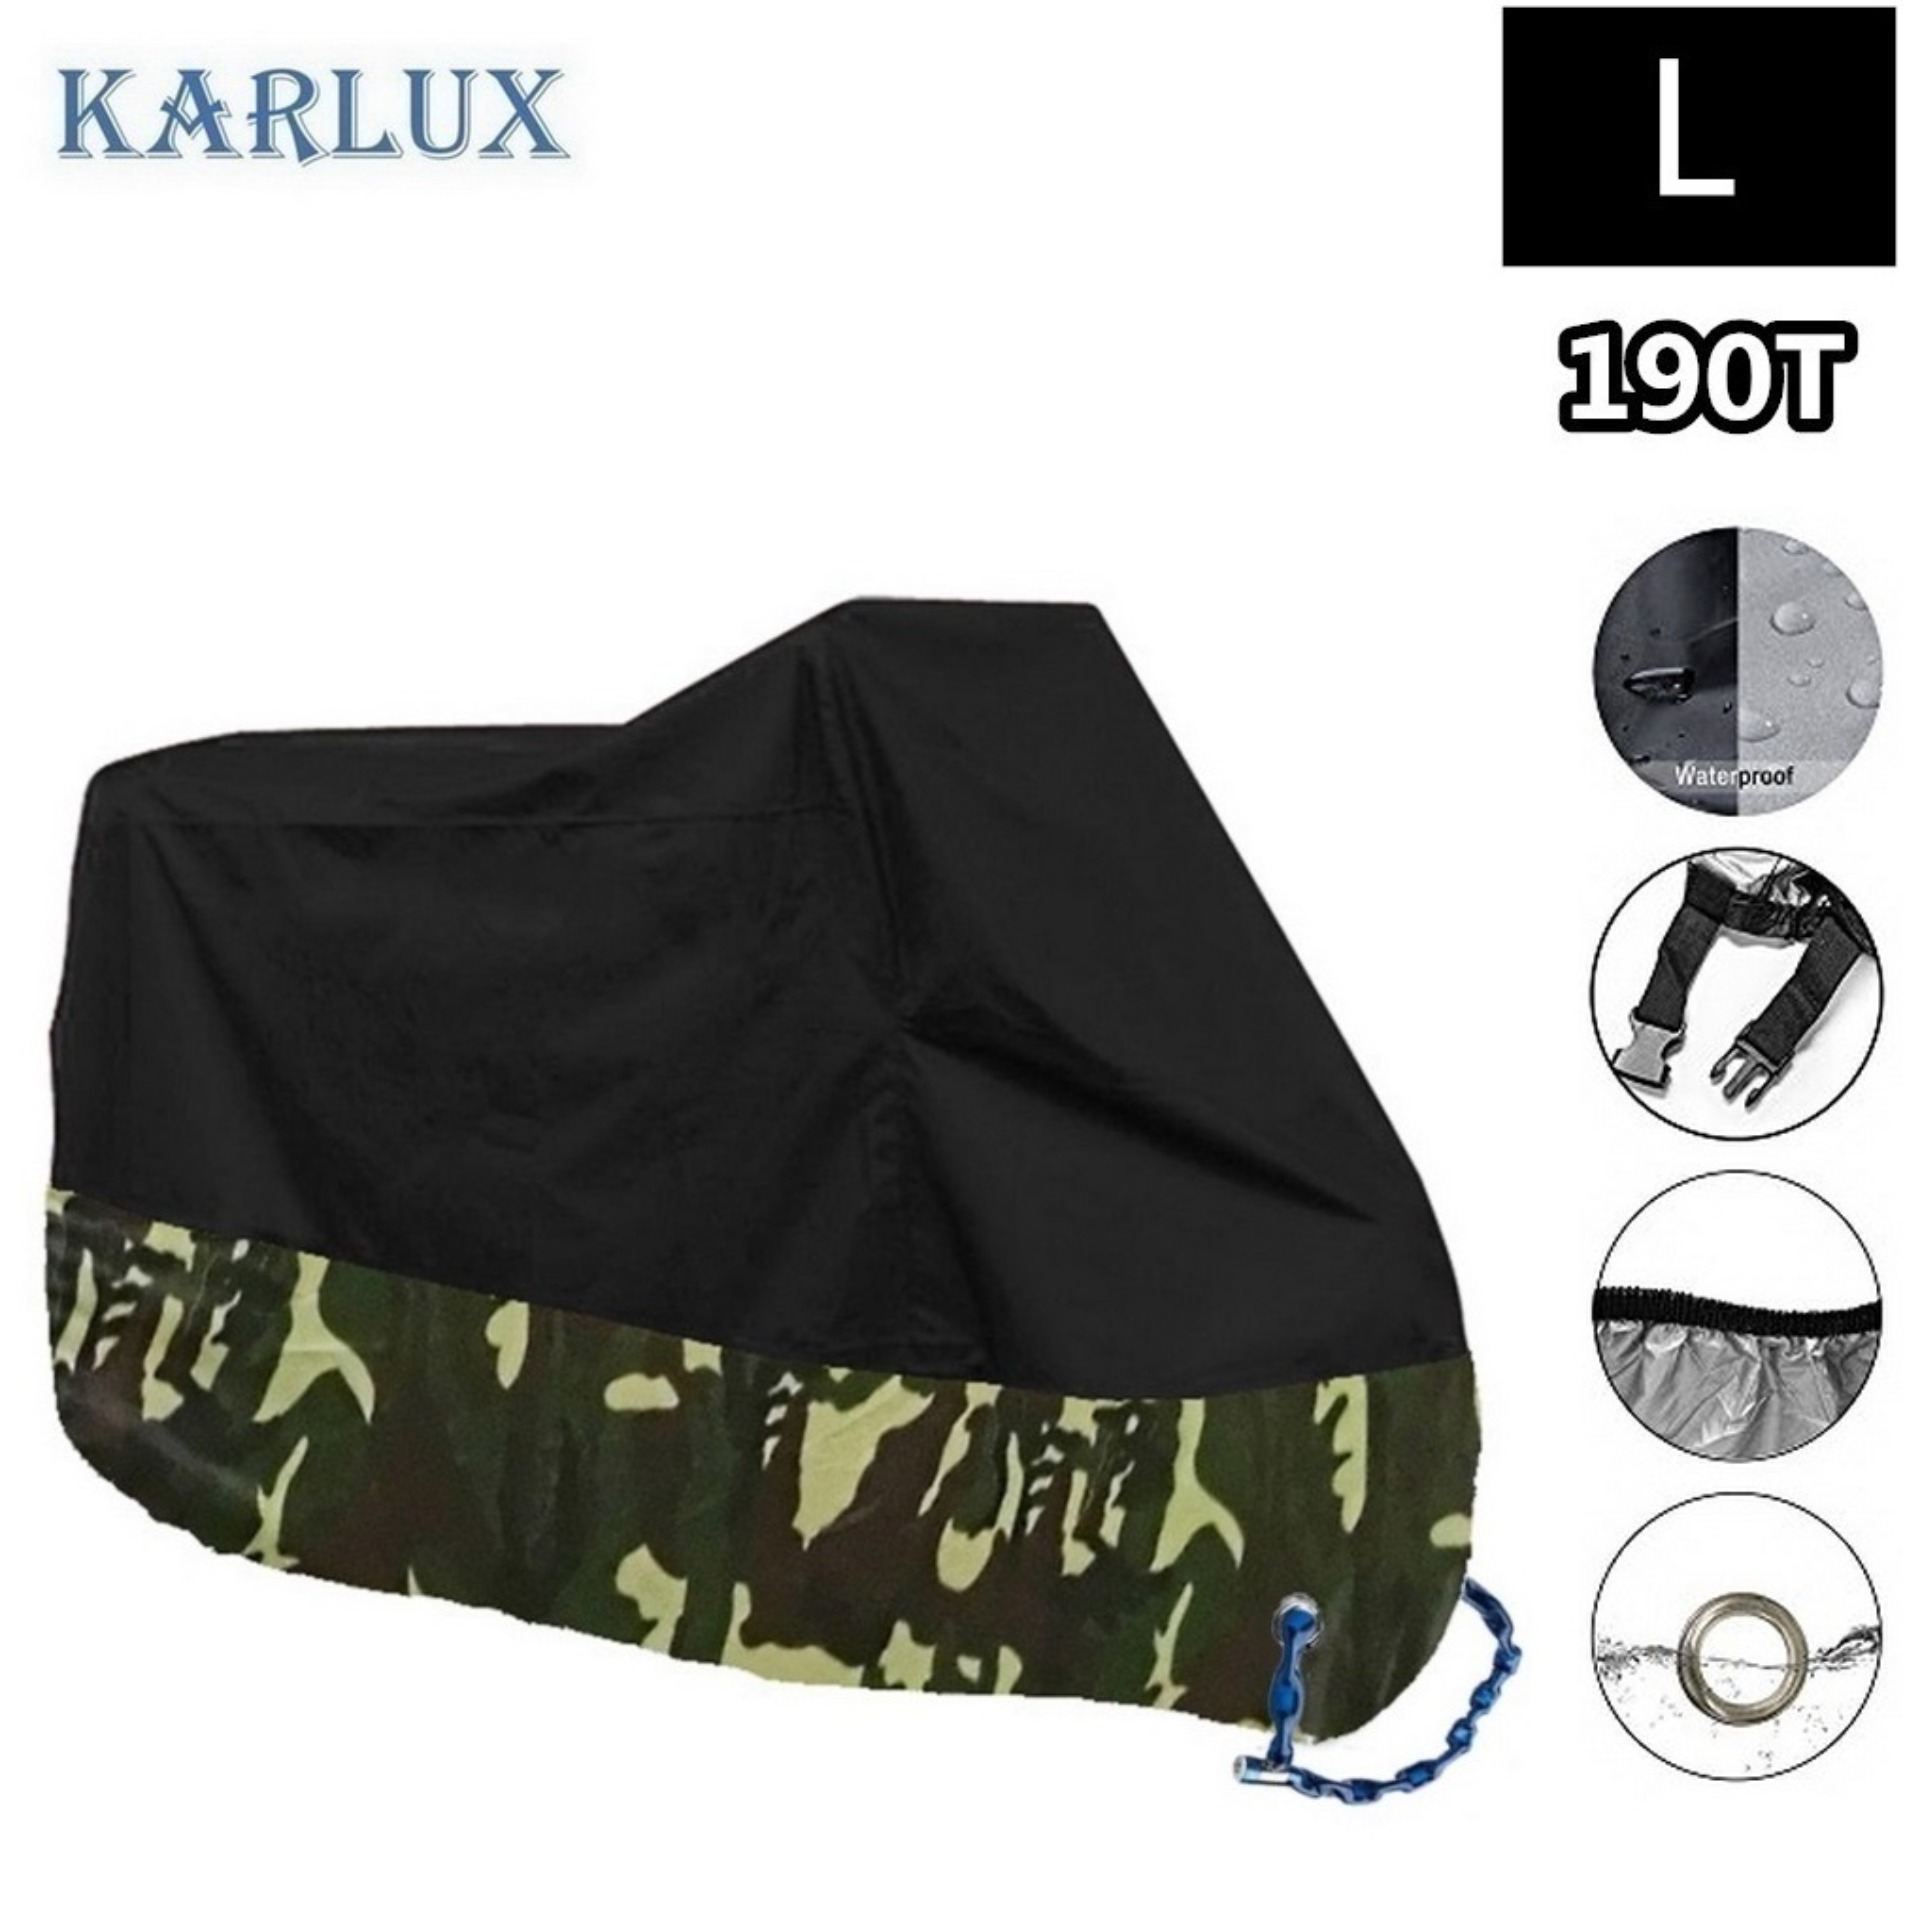 Karlux Large ผ้าคลุมรถมอเตอร์ไซค์ บิ๊กไบค์ จักยาน กันน้ำ กันแดด กันฝุ่น สีดำ/ลายทหาร Black Motorbike Waterproof Cover Protector Case Cover Rain Protection Breathable